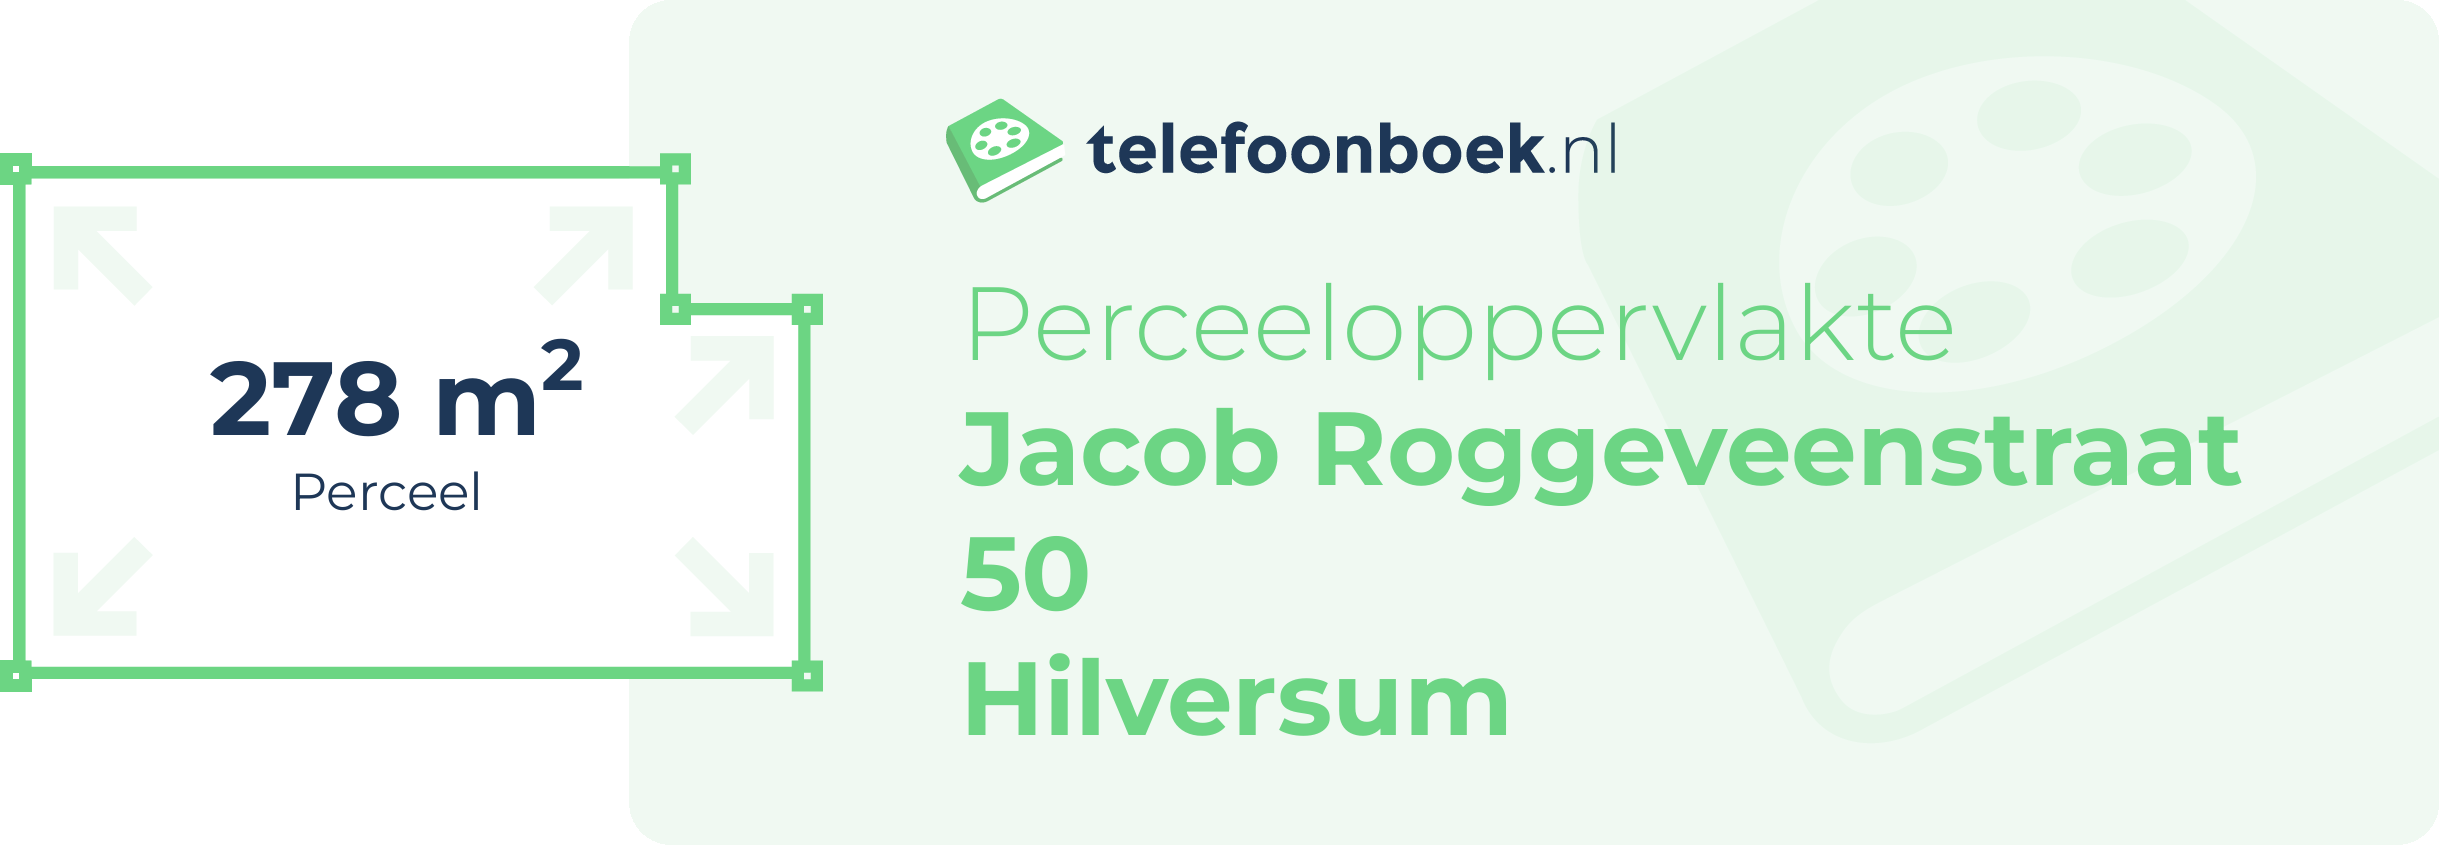 Perceeloppervlakte Jacob Roggeveenstraat 50 Hilversum